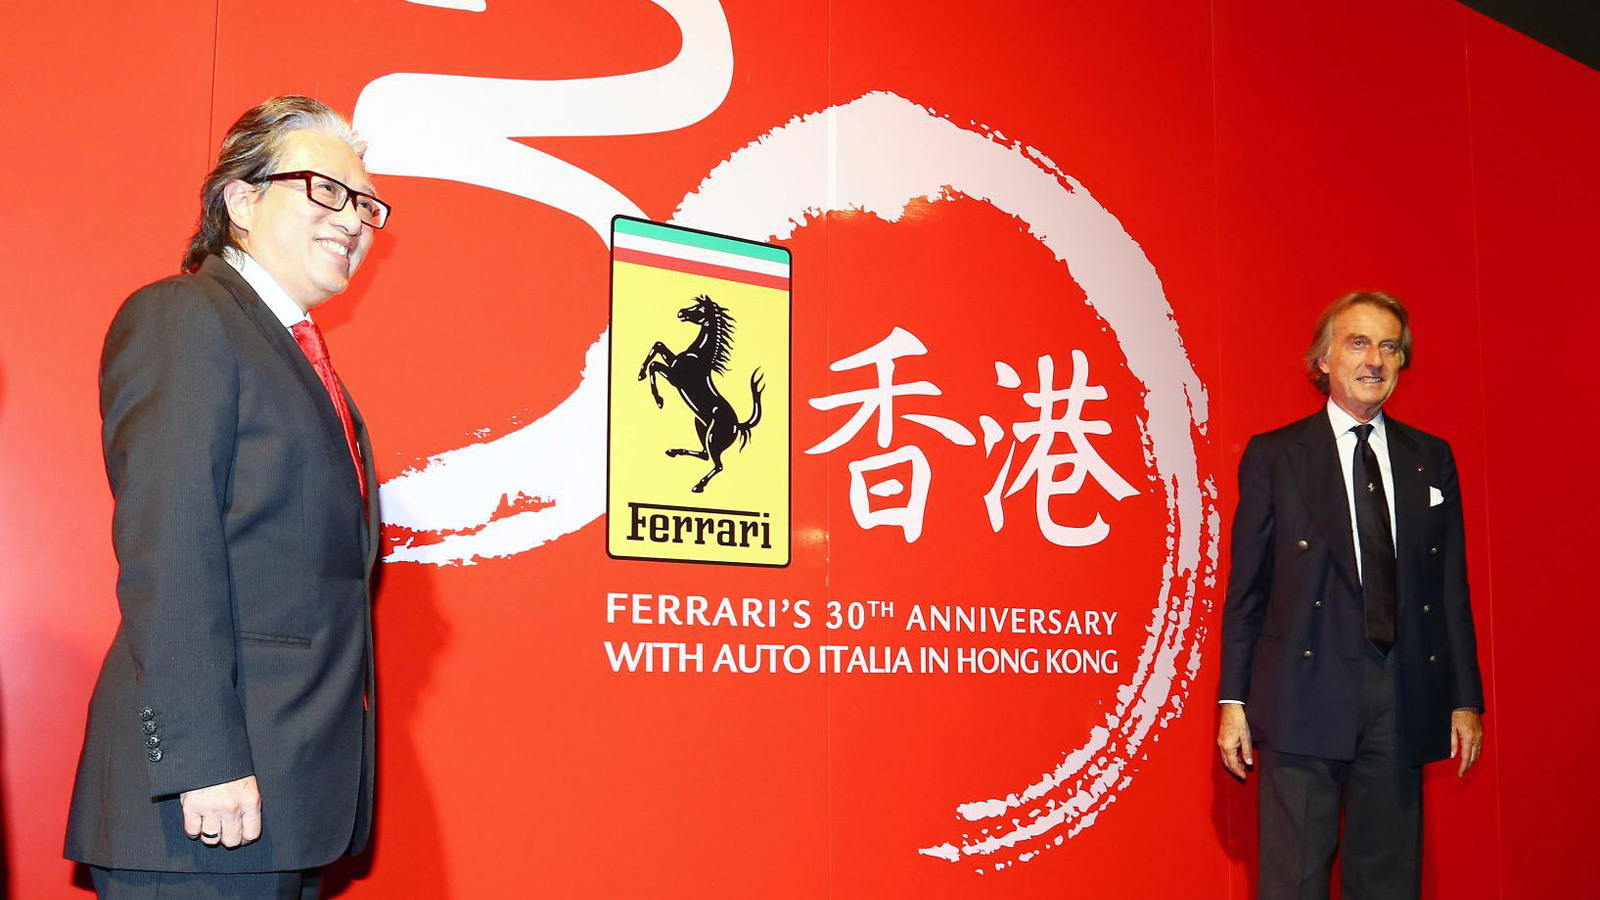 Ferrari’s 30 years in Hong Kong celebration